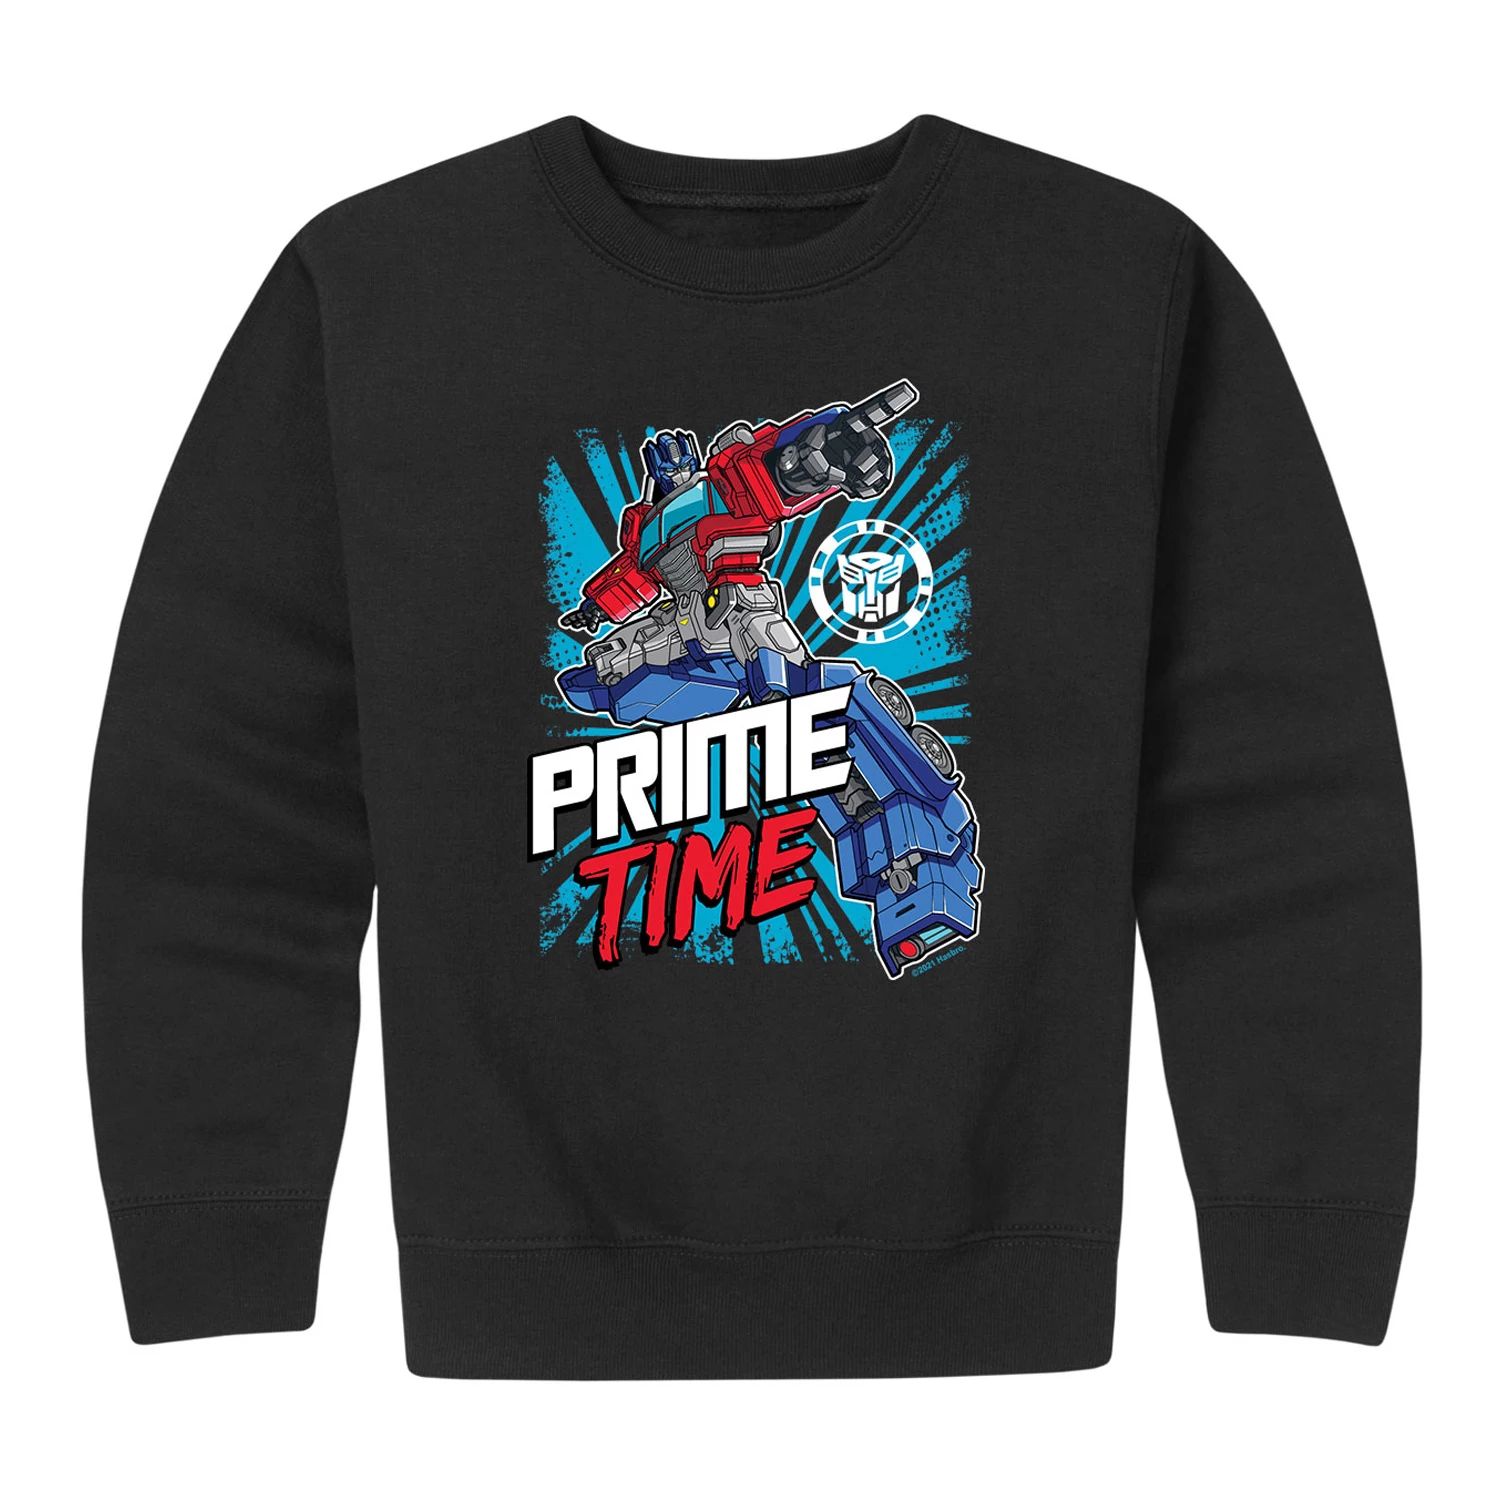 Флисовая толстовка Prime Time с рисунком Transformers Prime Time для мальчиков 8–20 лет Licensed Character флисовая толстовка donnie для мальчиков 8–20 лет tmnt ninja time licensed character синий